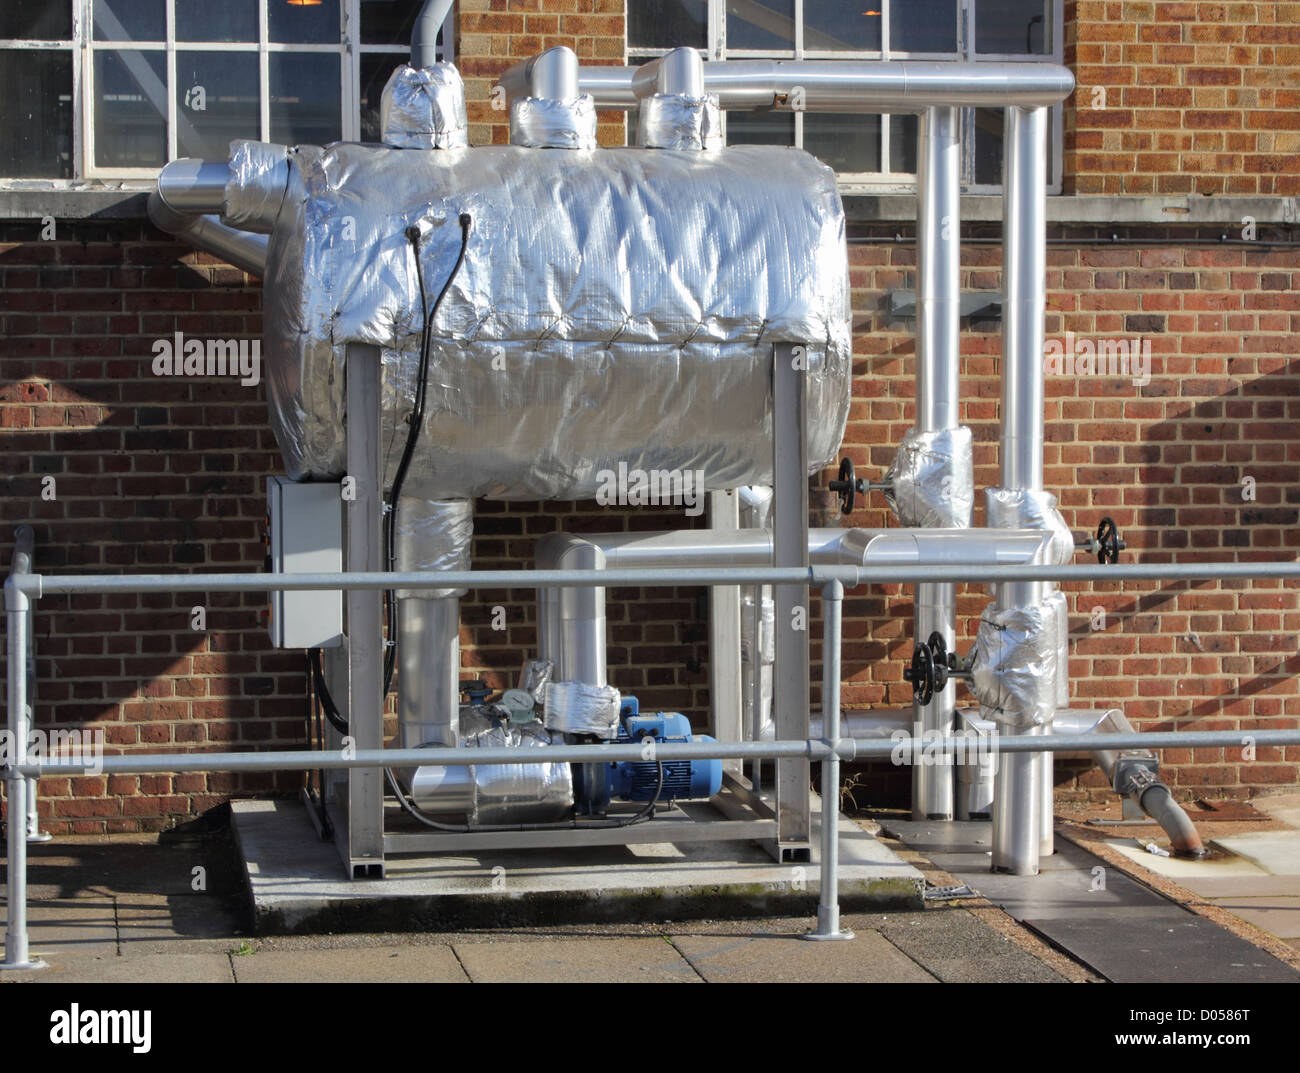 Condensate pumping set Stock Photo